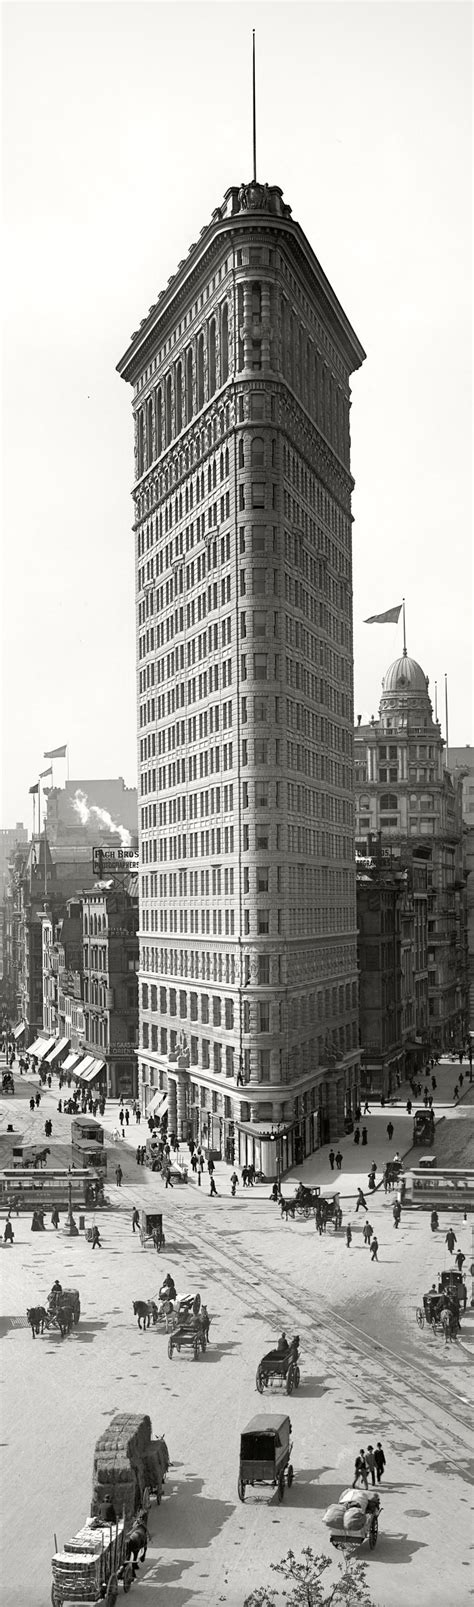 Flatiron Building New York City 1902 Architects Daniel Burnham